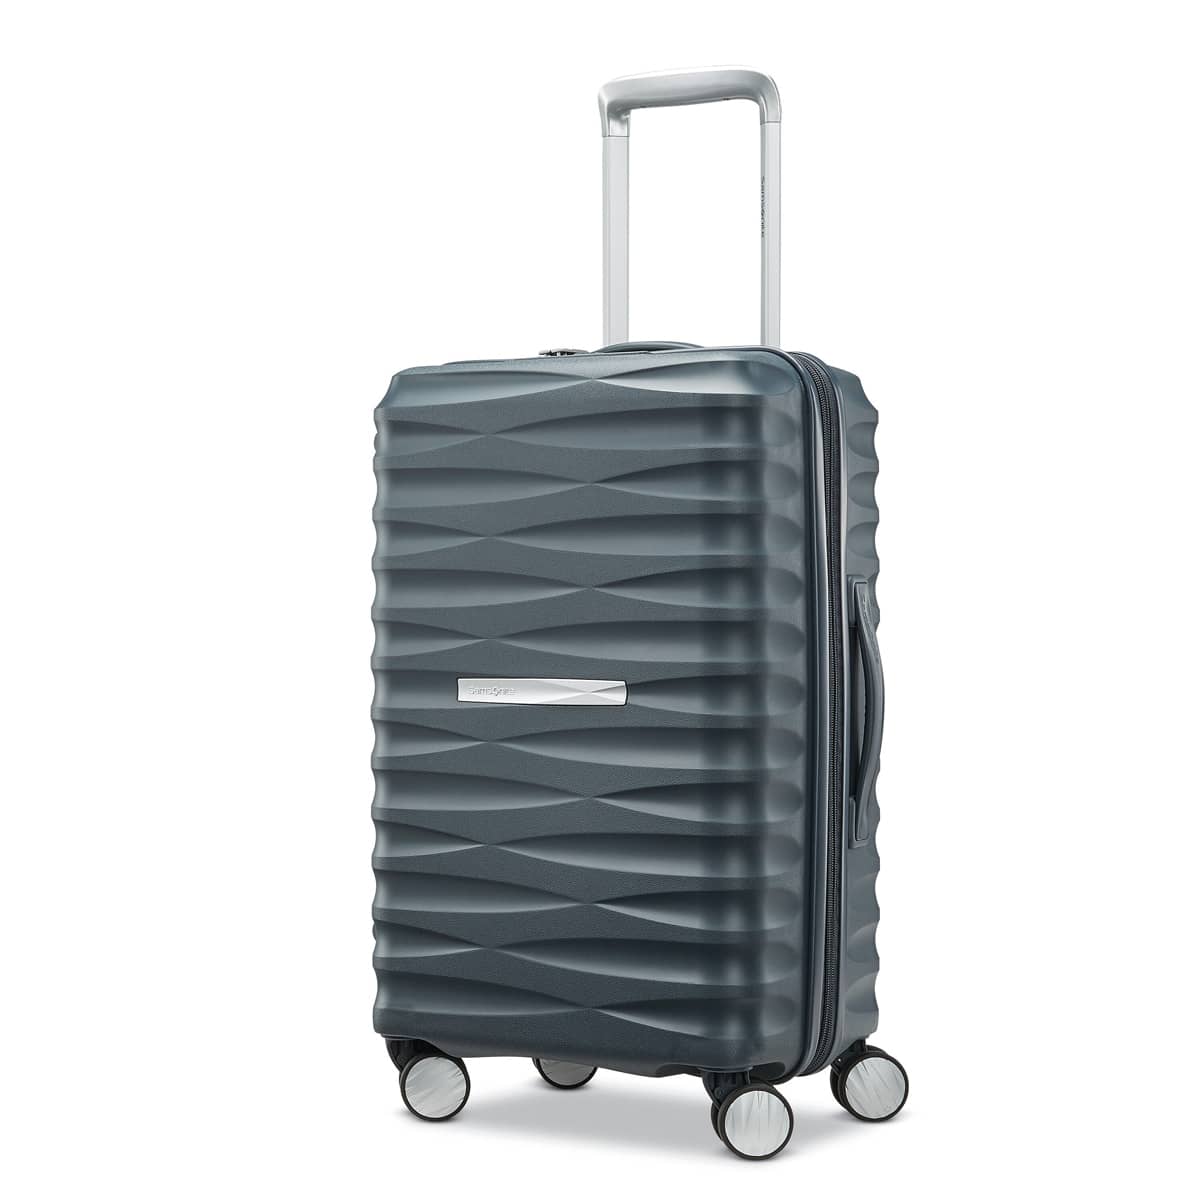 Samsonite 22 x 14 x 9 carry-on luggage